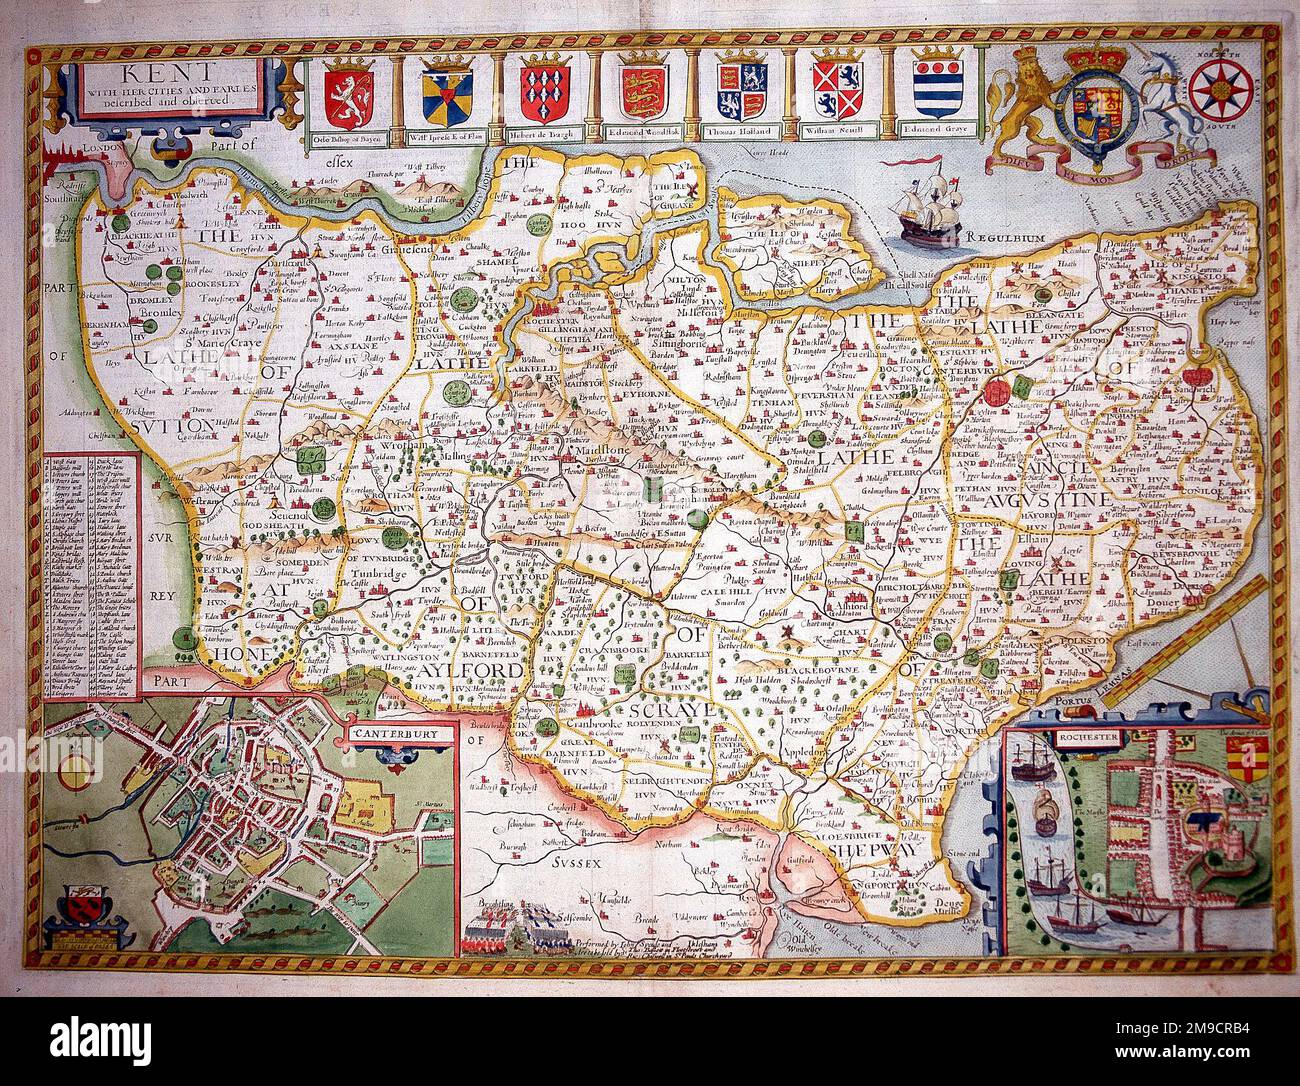 17th Century County carte de Kent, Angleterre Banque D'Images